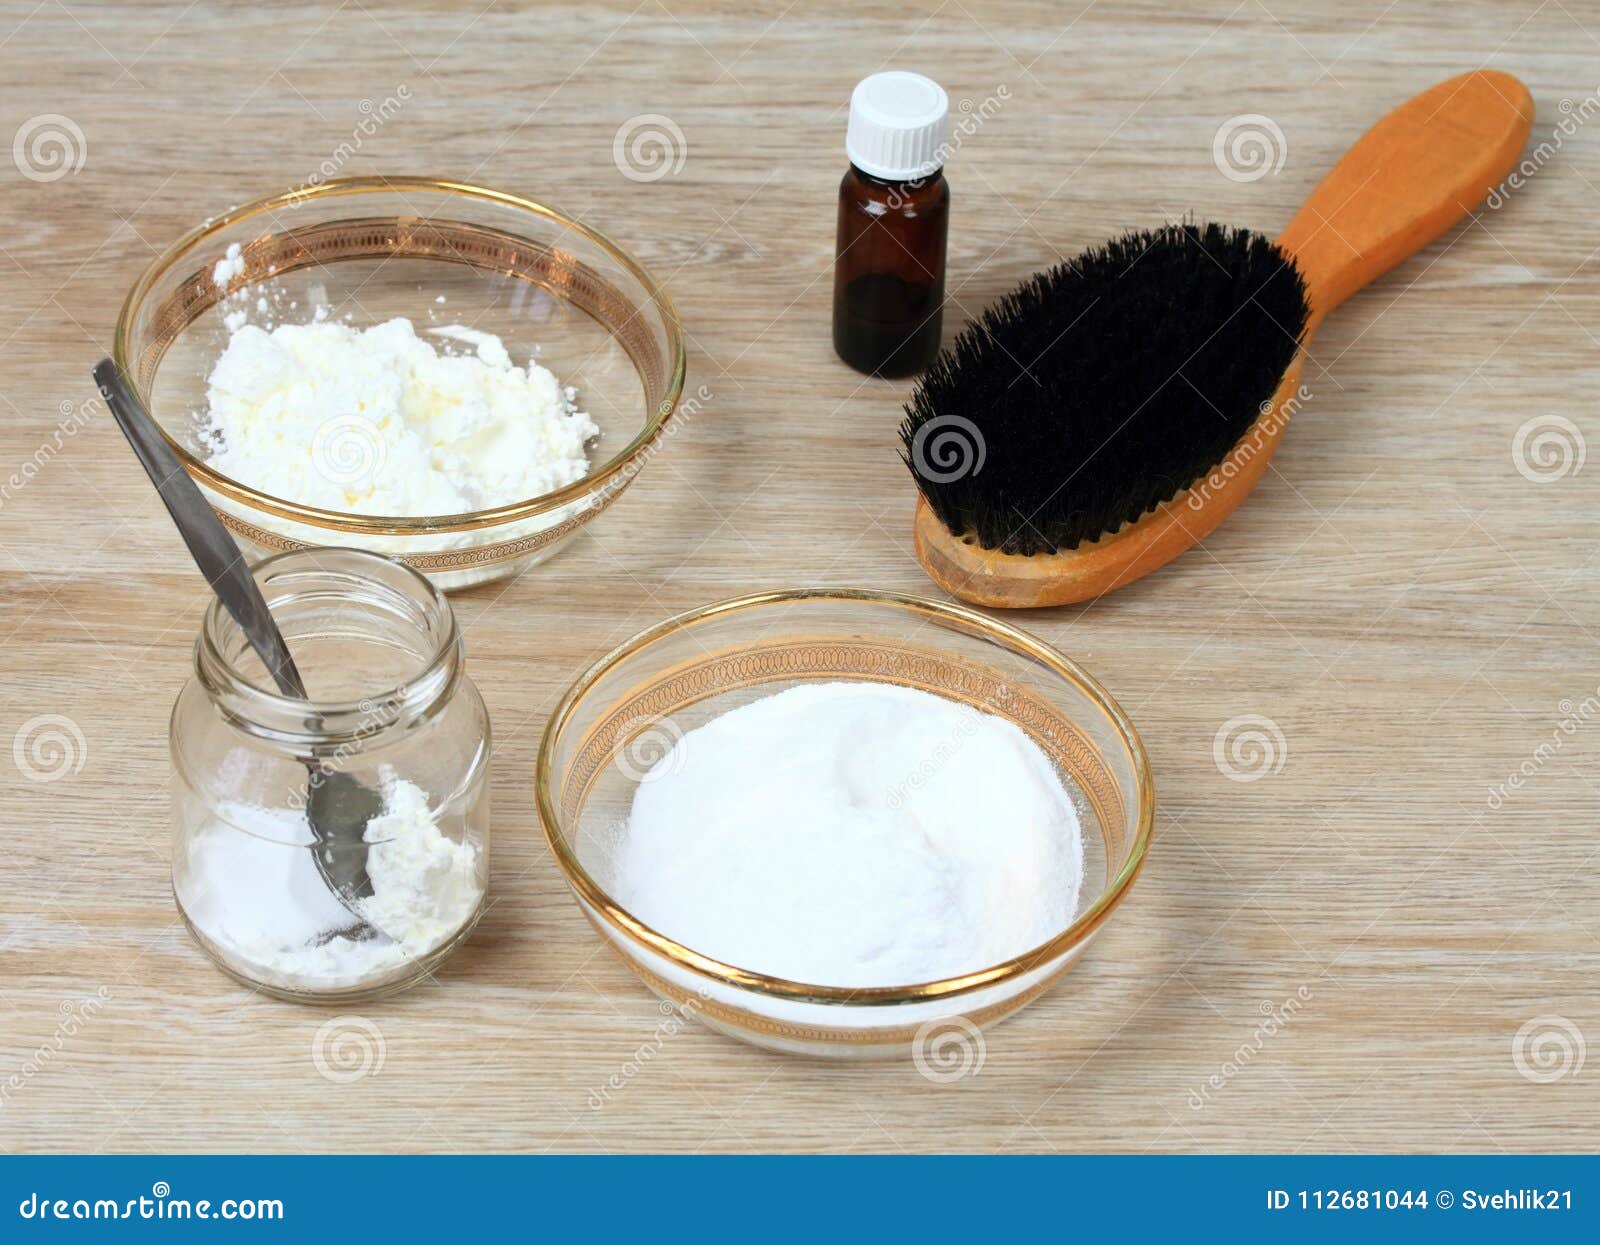 Homemade Dry Shampoo in a Glass Jar Stock Photo - Image of alternative,  health: 112681044